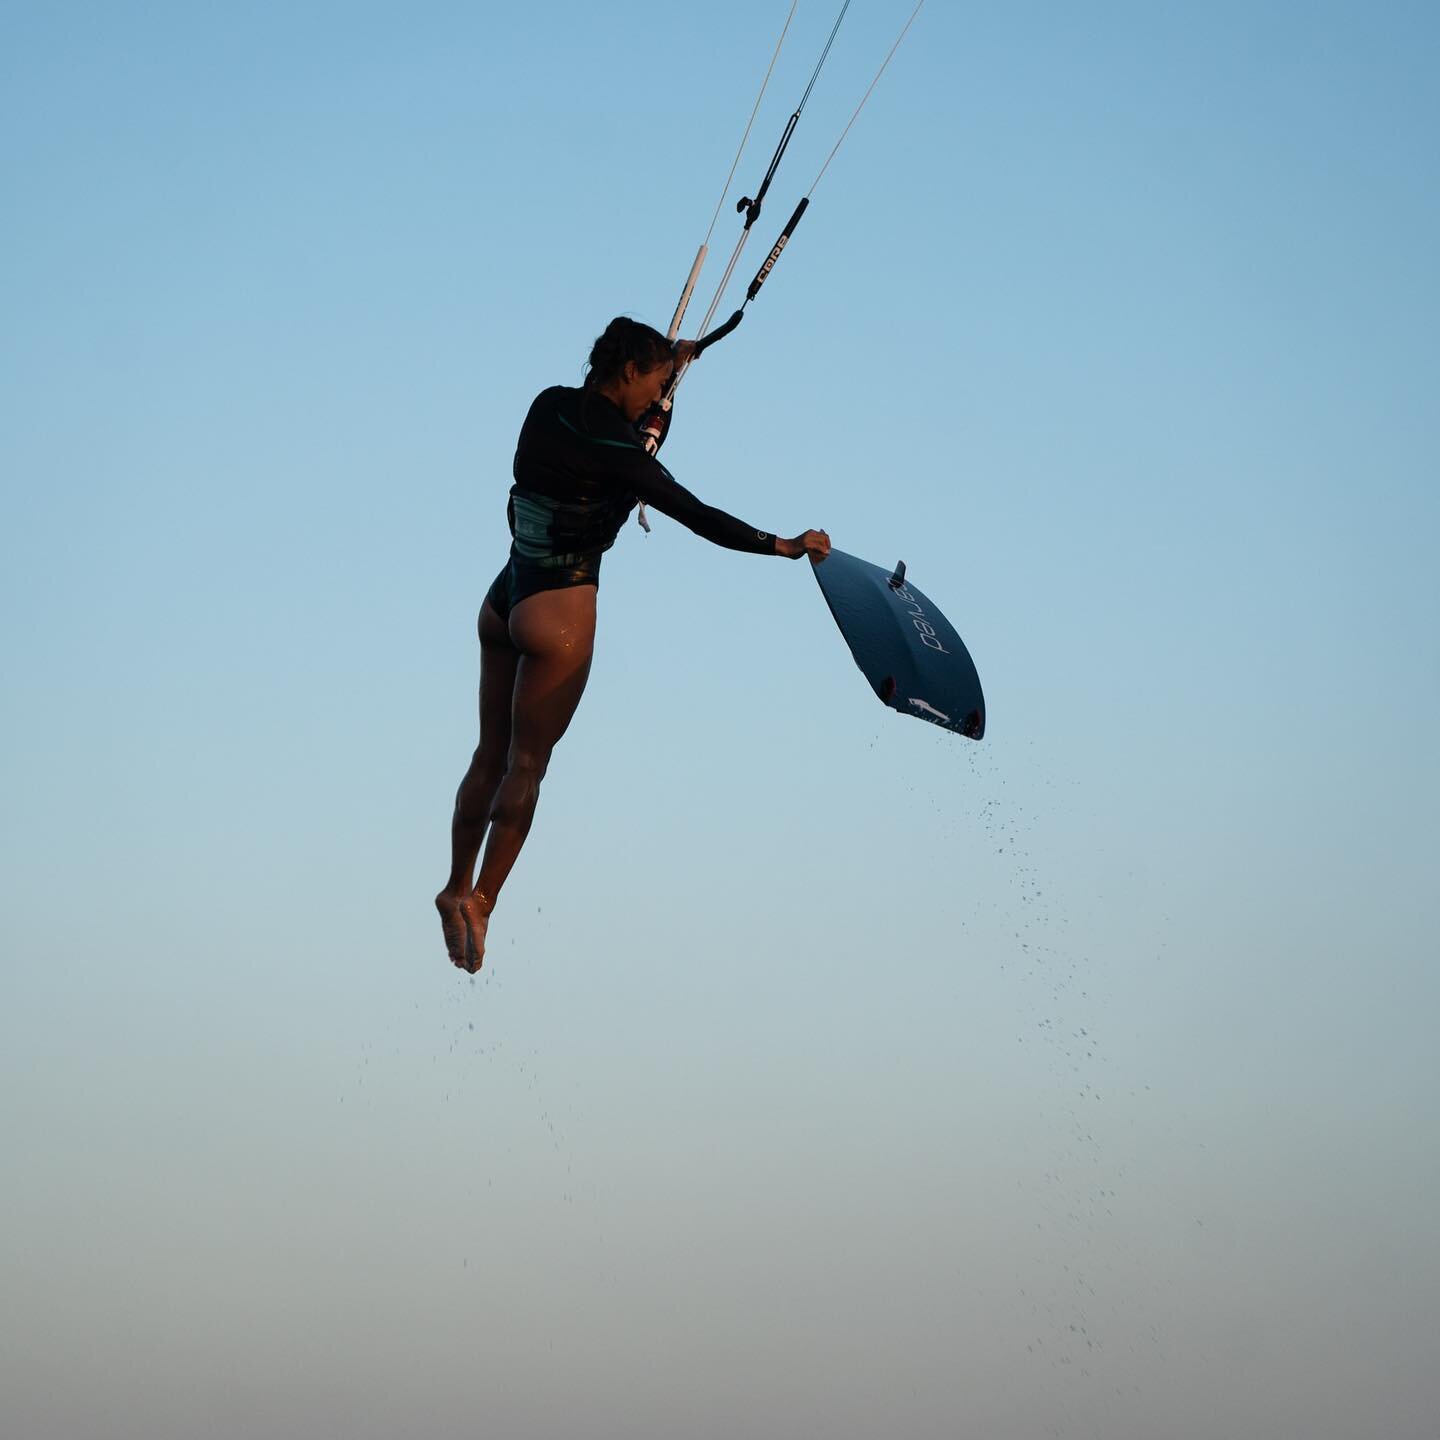 @jasmine.cho kiting in style 

#kitesurf #boardoff #egypt #redsea #kitecruise #kitesafari